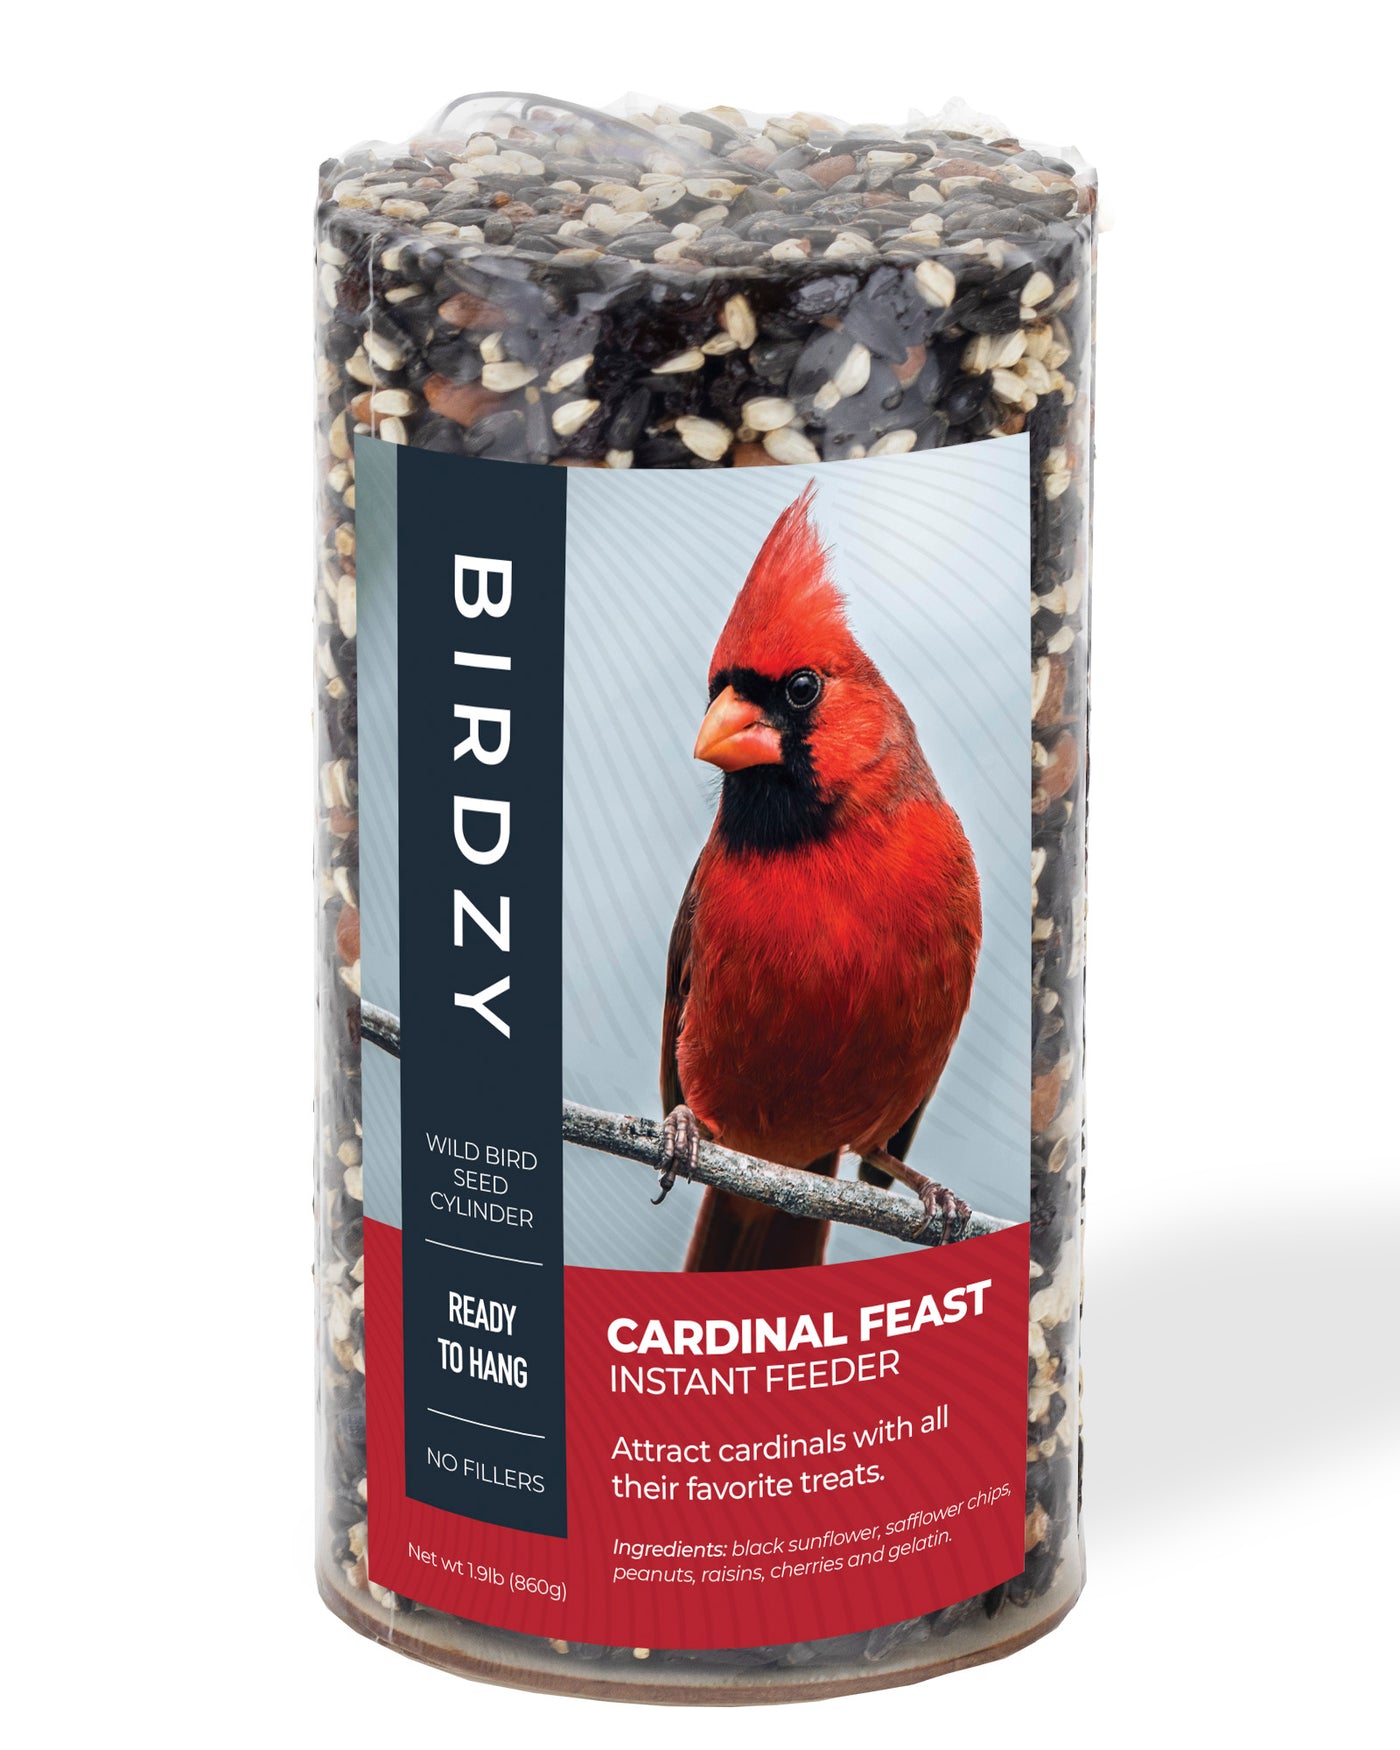 Cardinal Feast Seed Cylinder